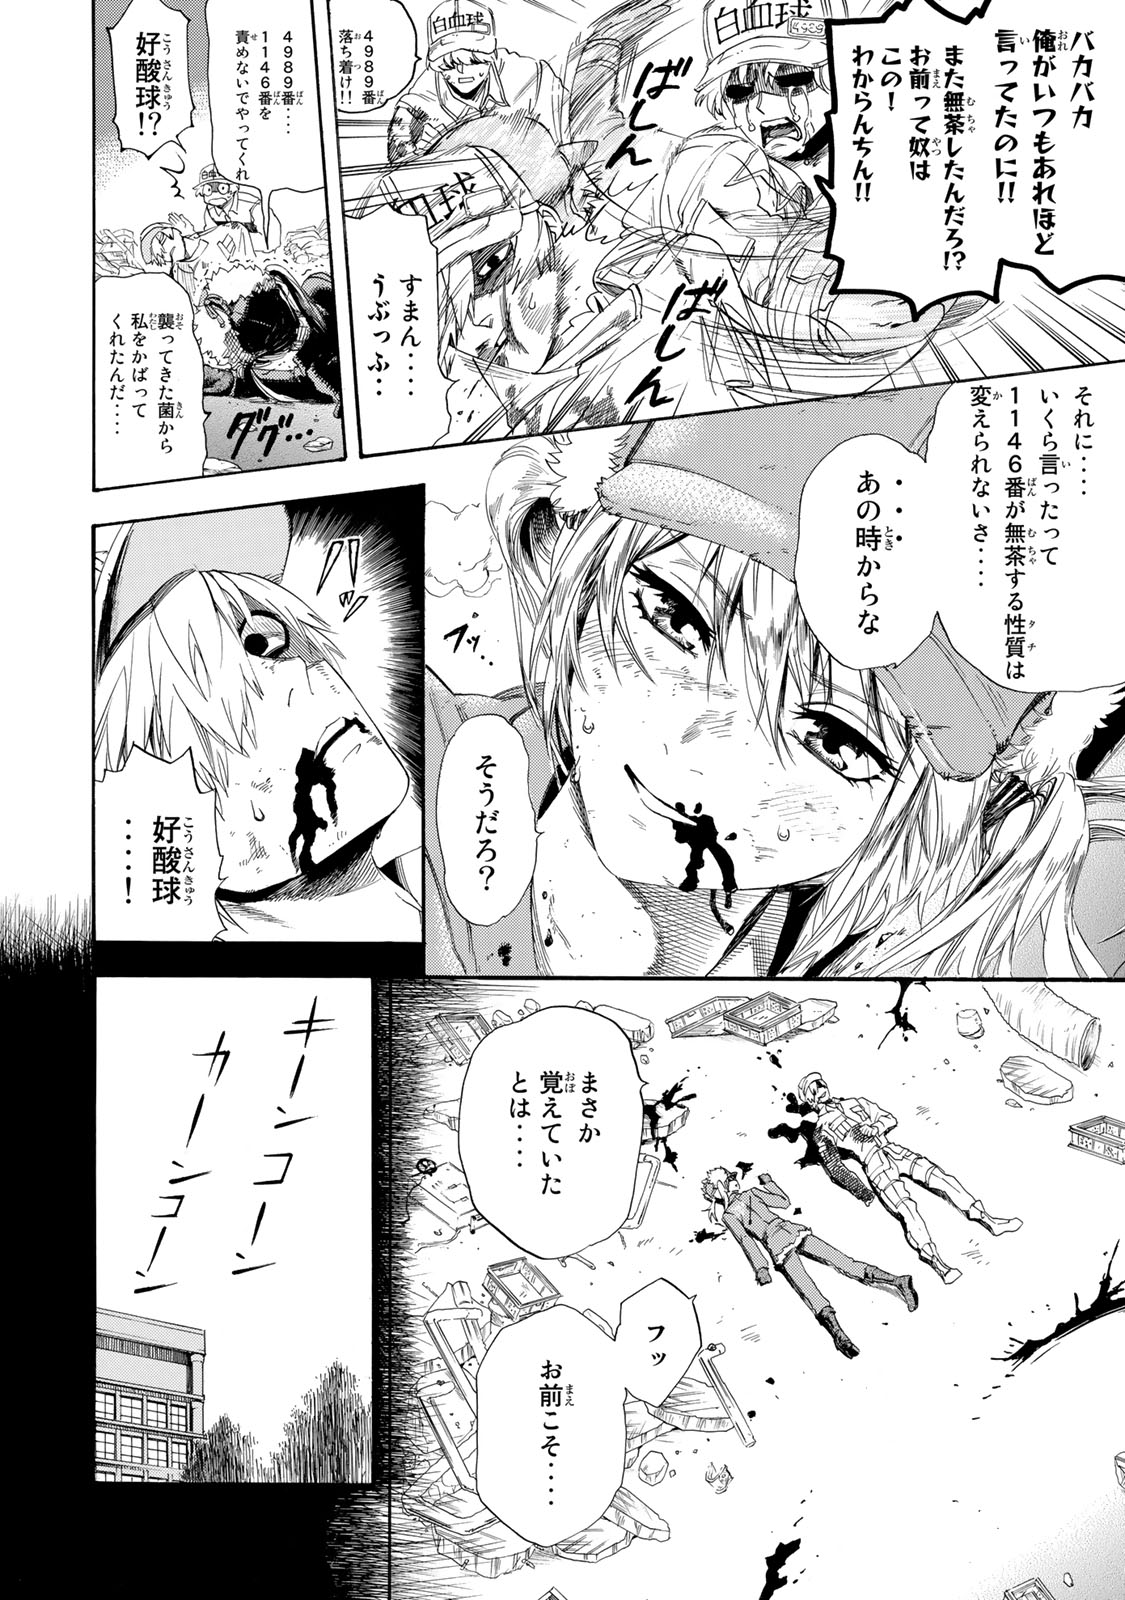 Hataraku Saibou - Chapter 27 - Page 2